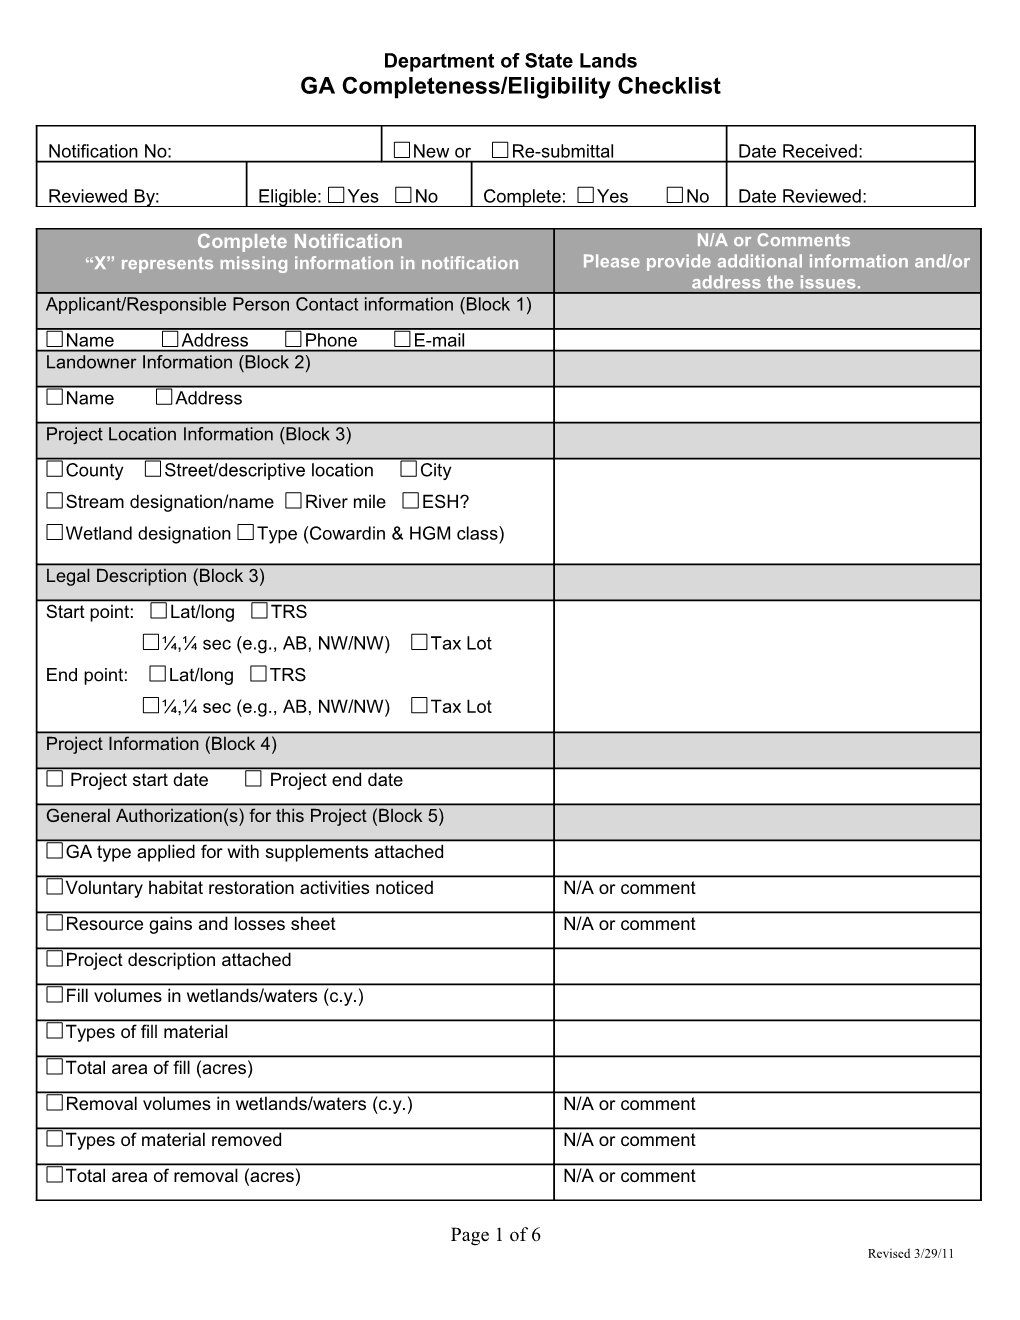 General Authorization Completeness/Eligibility Checklist